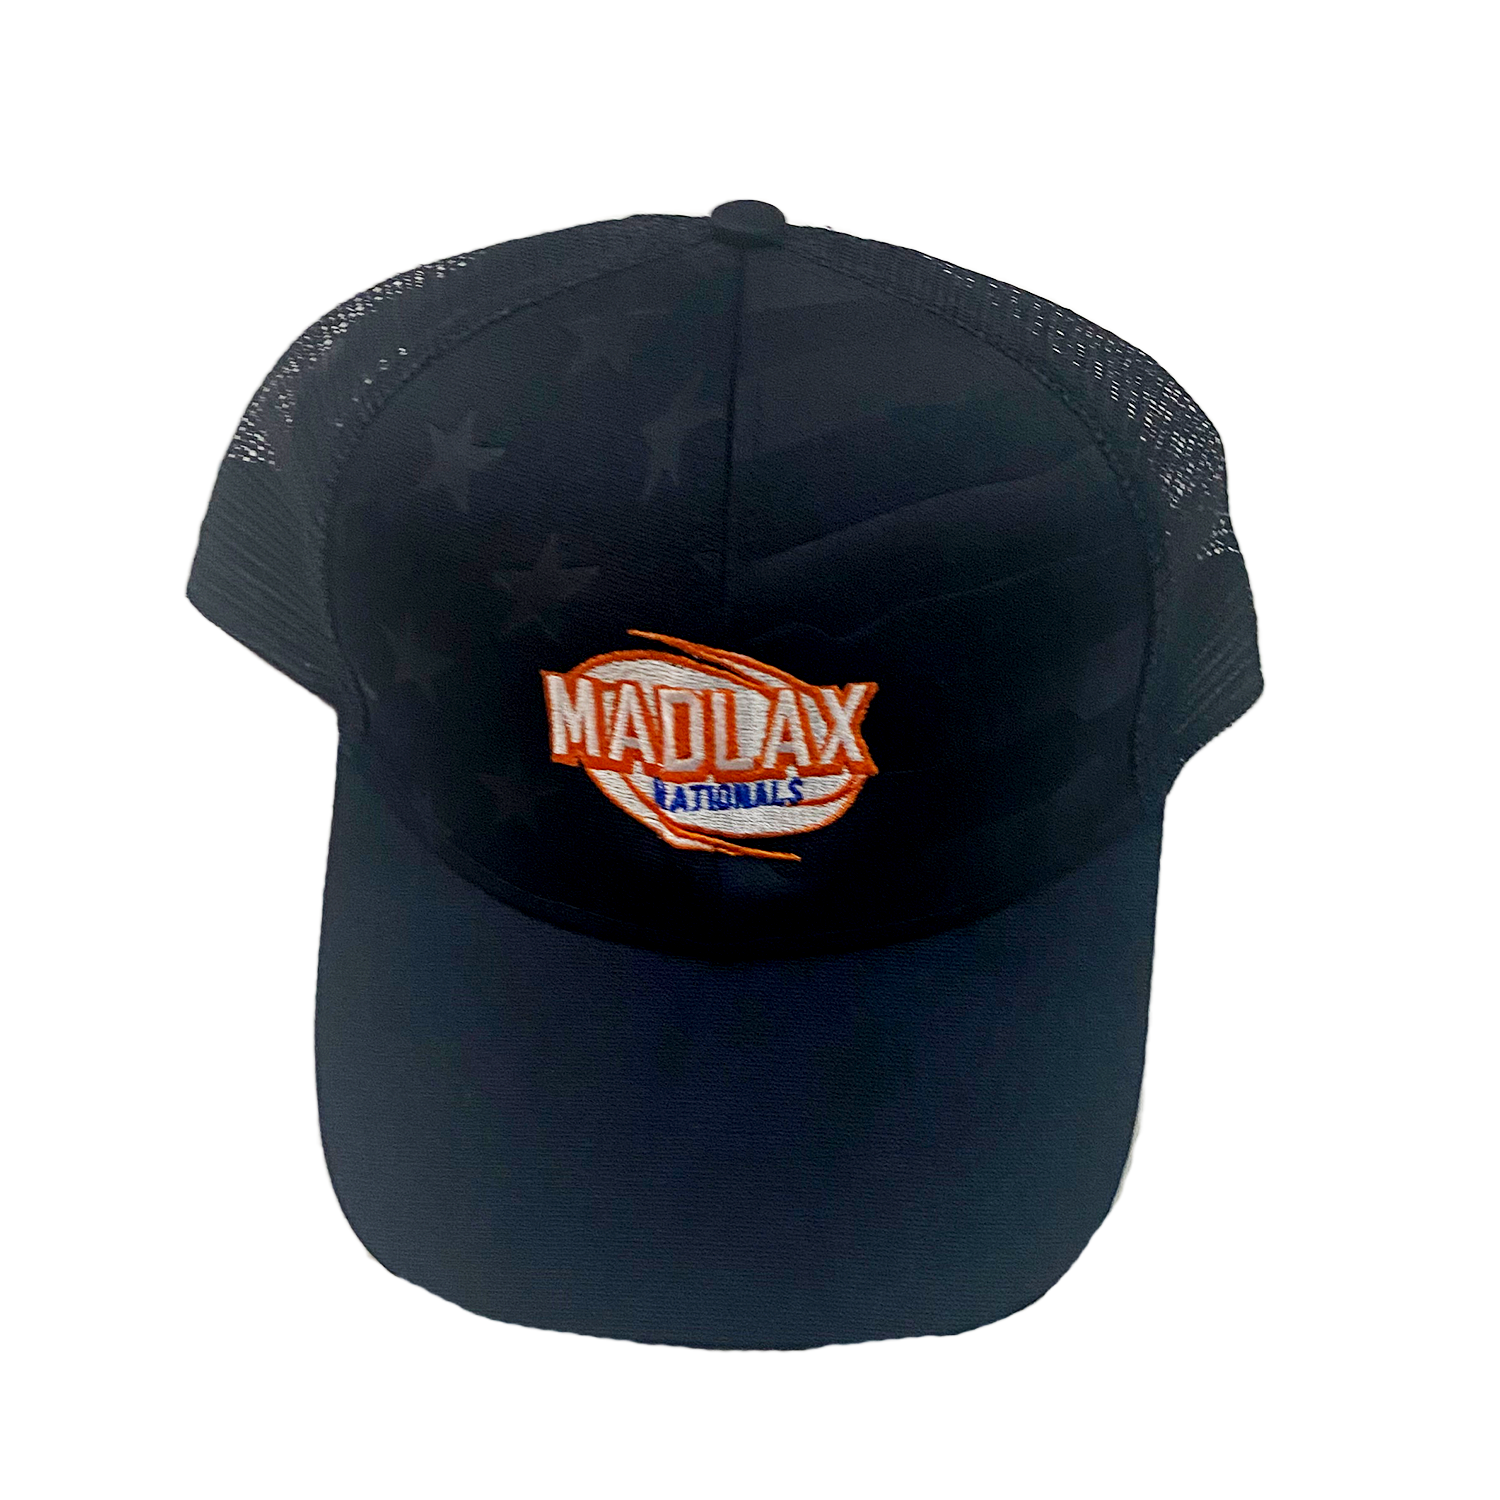 MadGear Nationals Mesh Back Hat